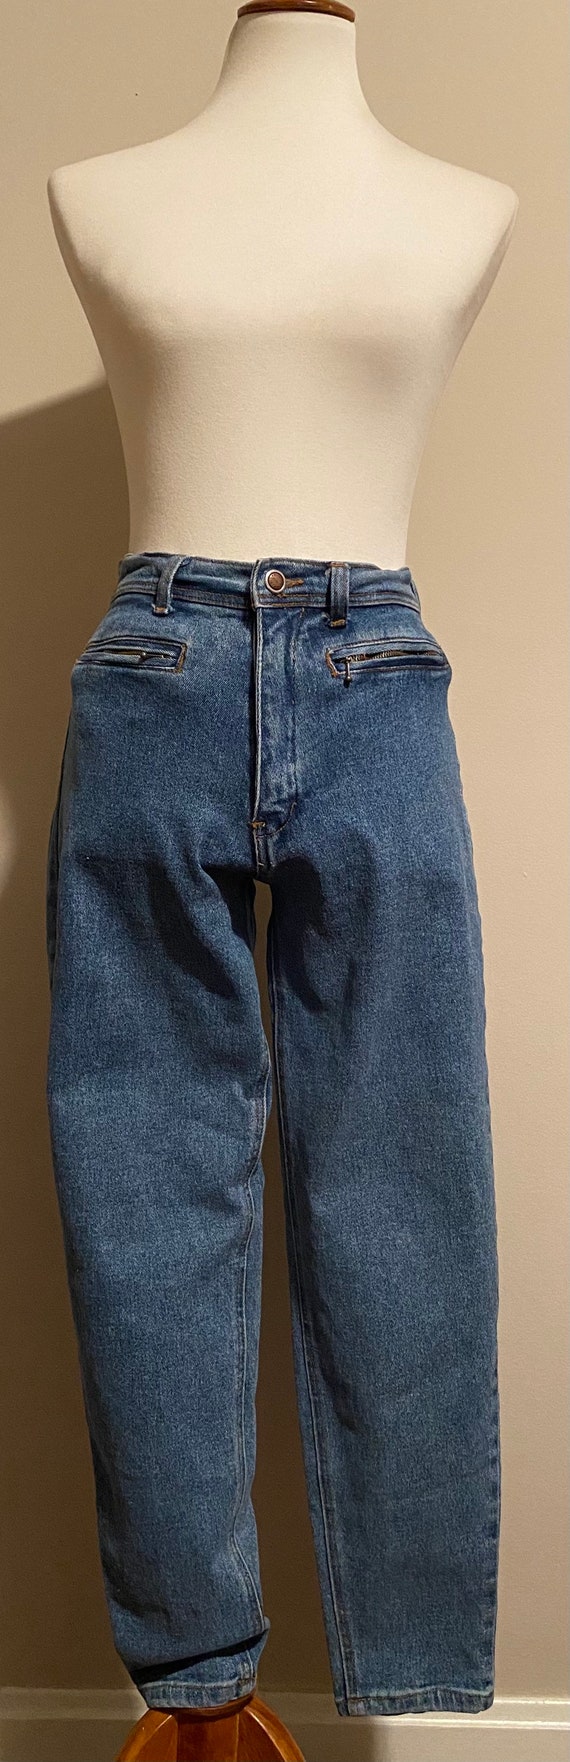 1980’s High Waist Jeans - image 2